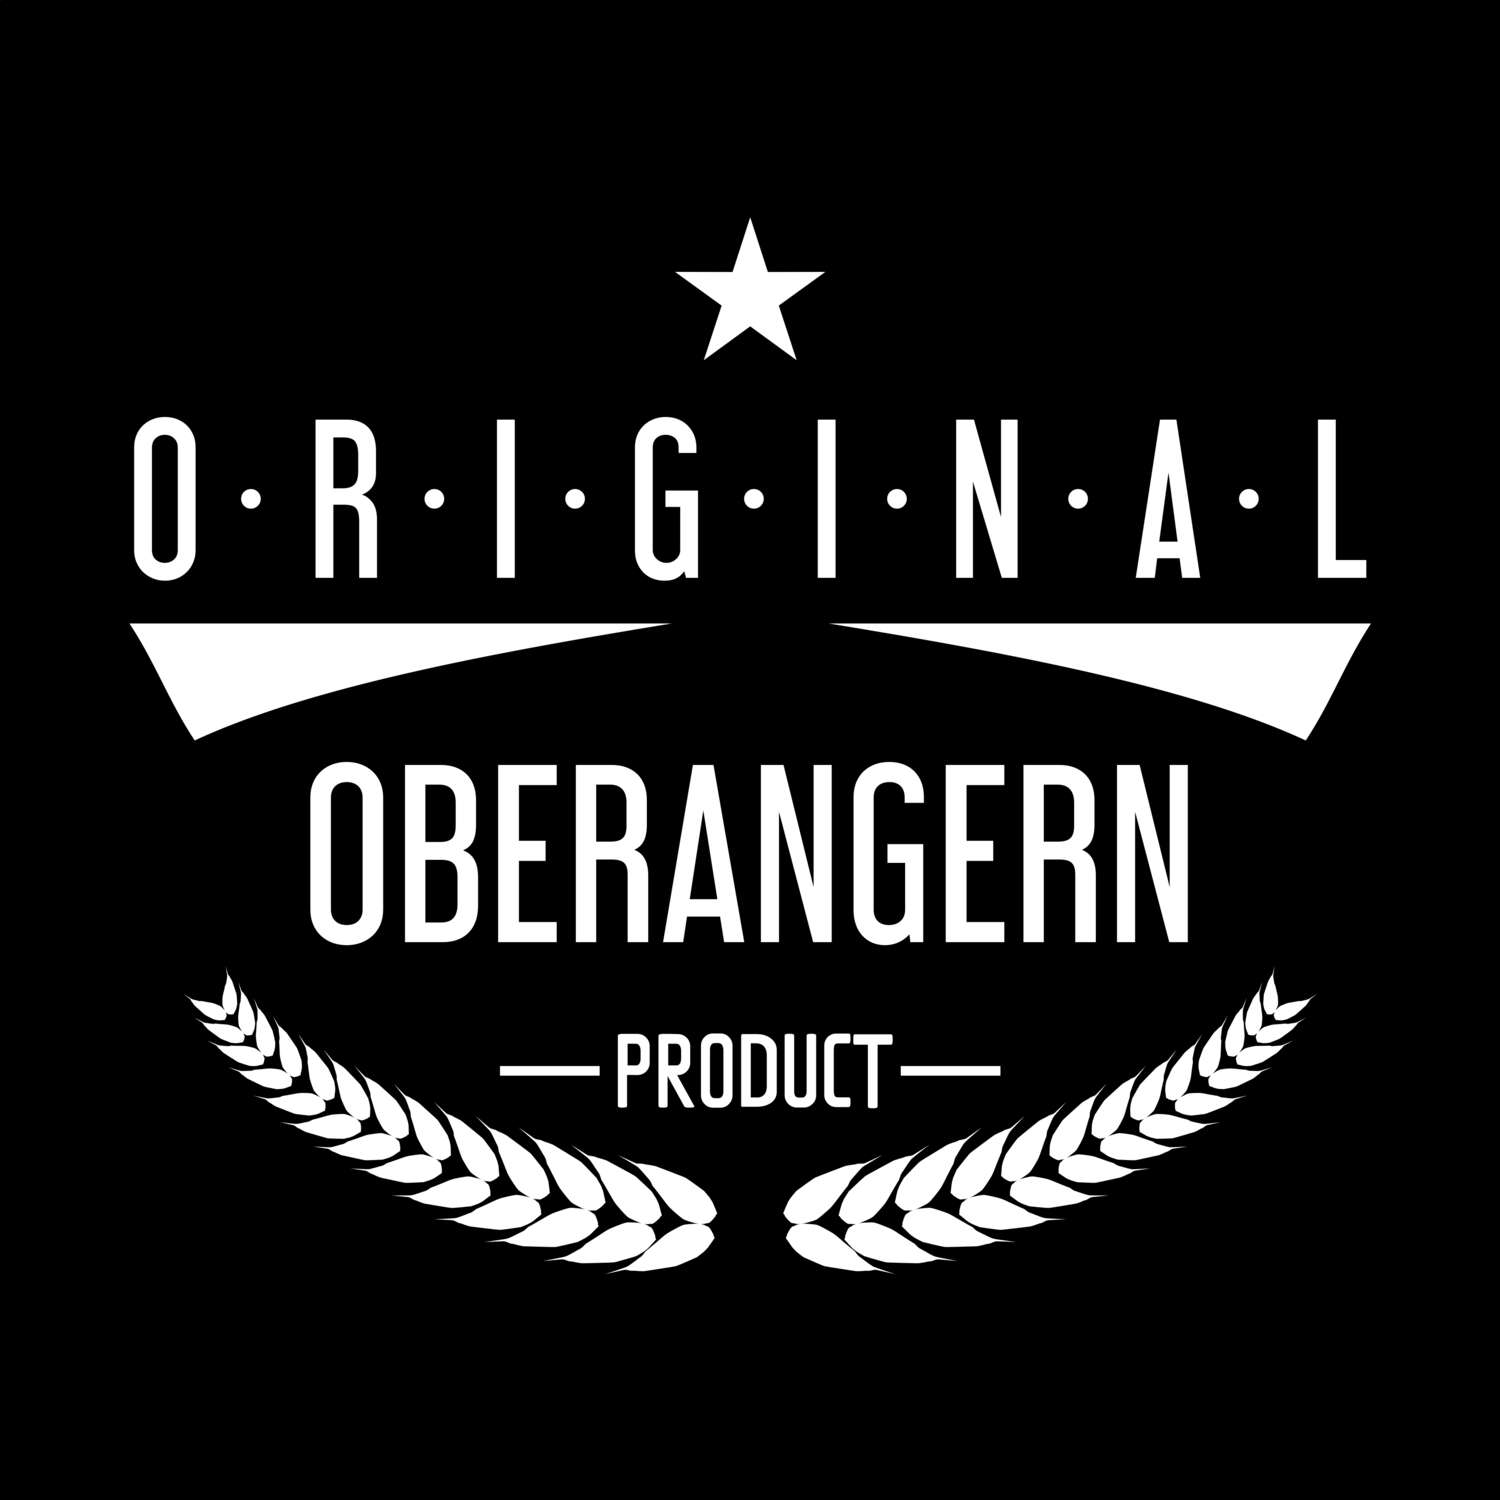 Oberangern T-Shirt »Original Product«